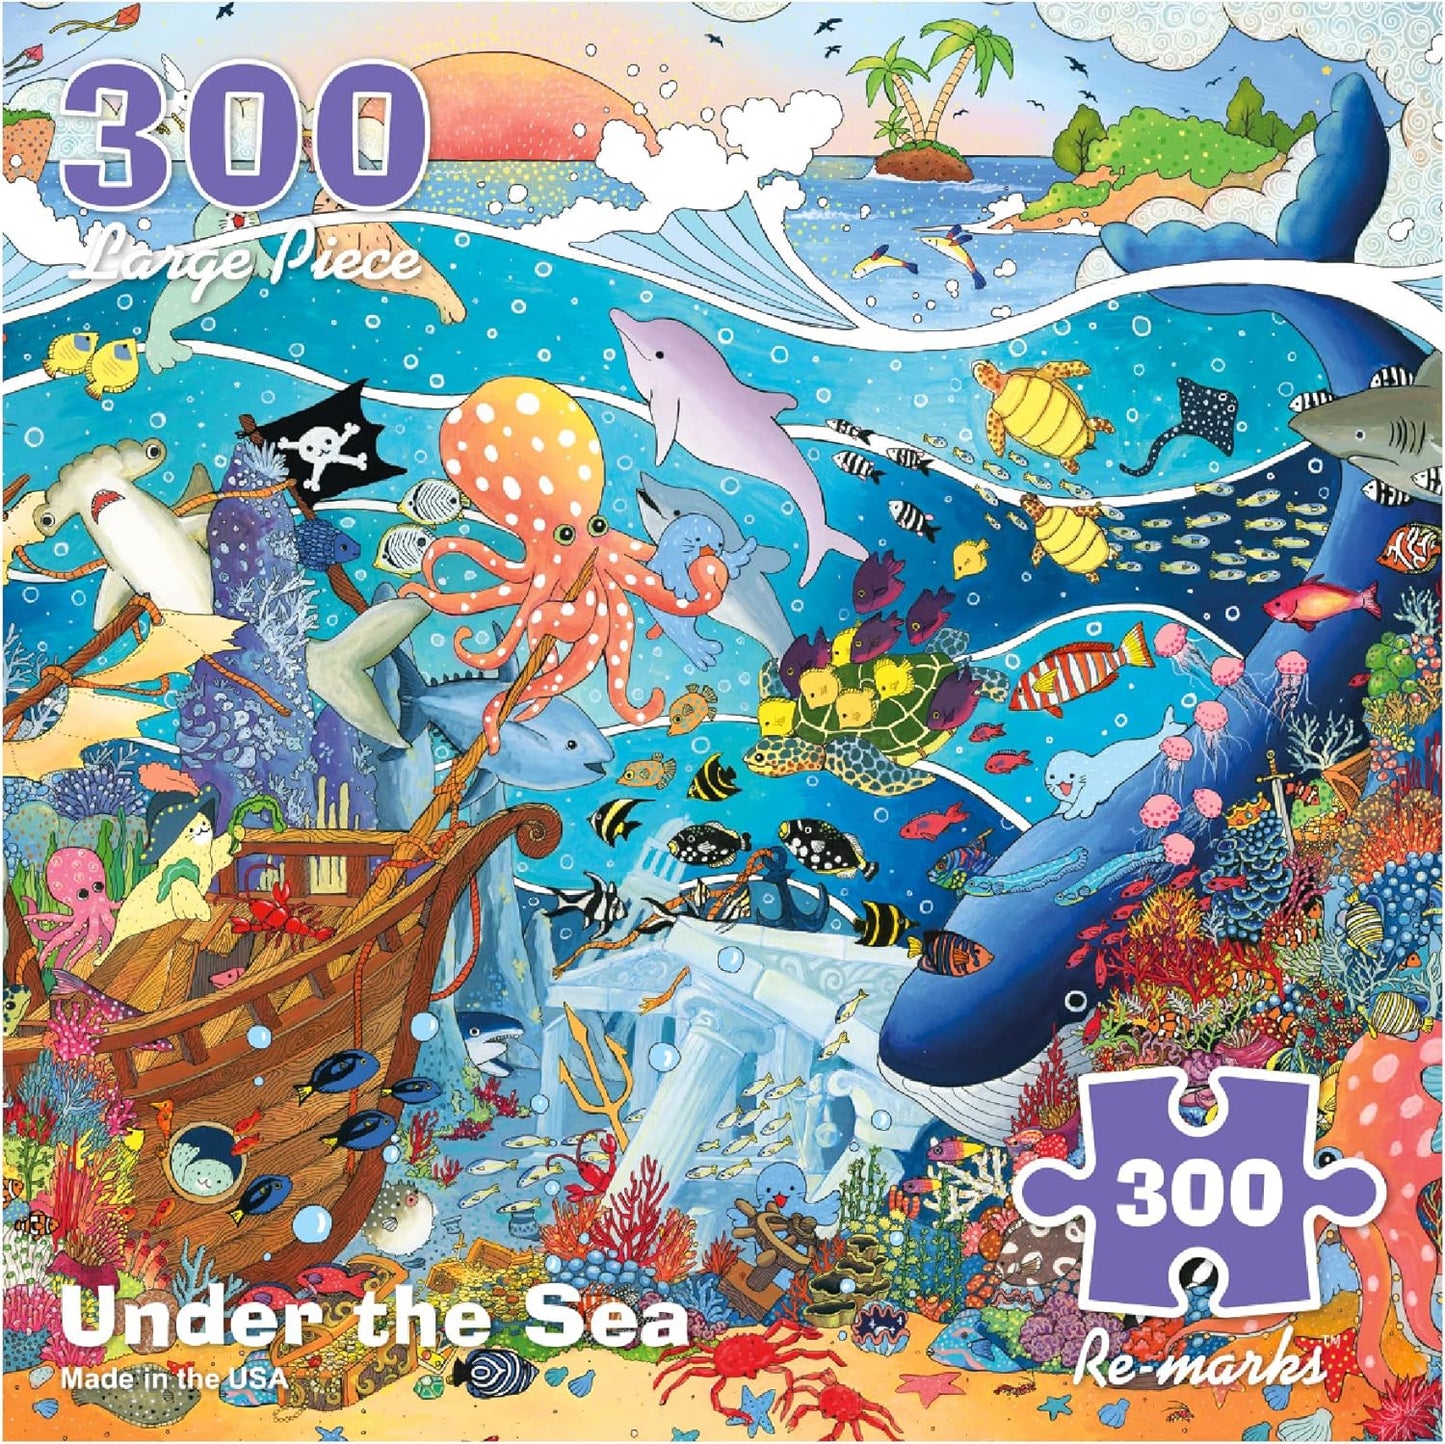 Under the Sea Illustration 300-Large Piece Jigsaw Puzzle